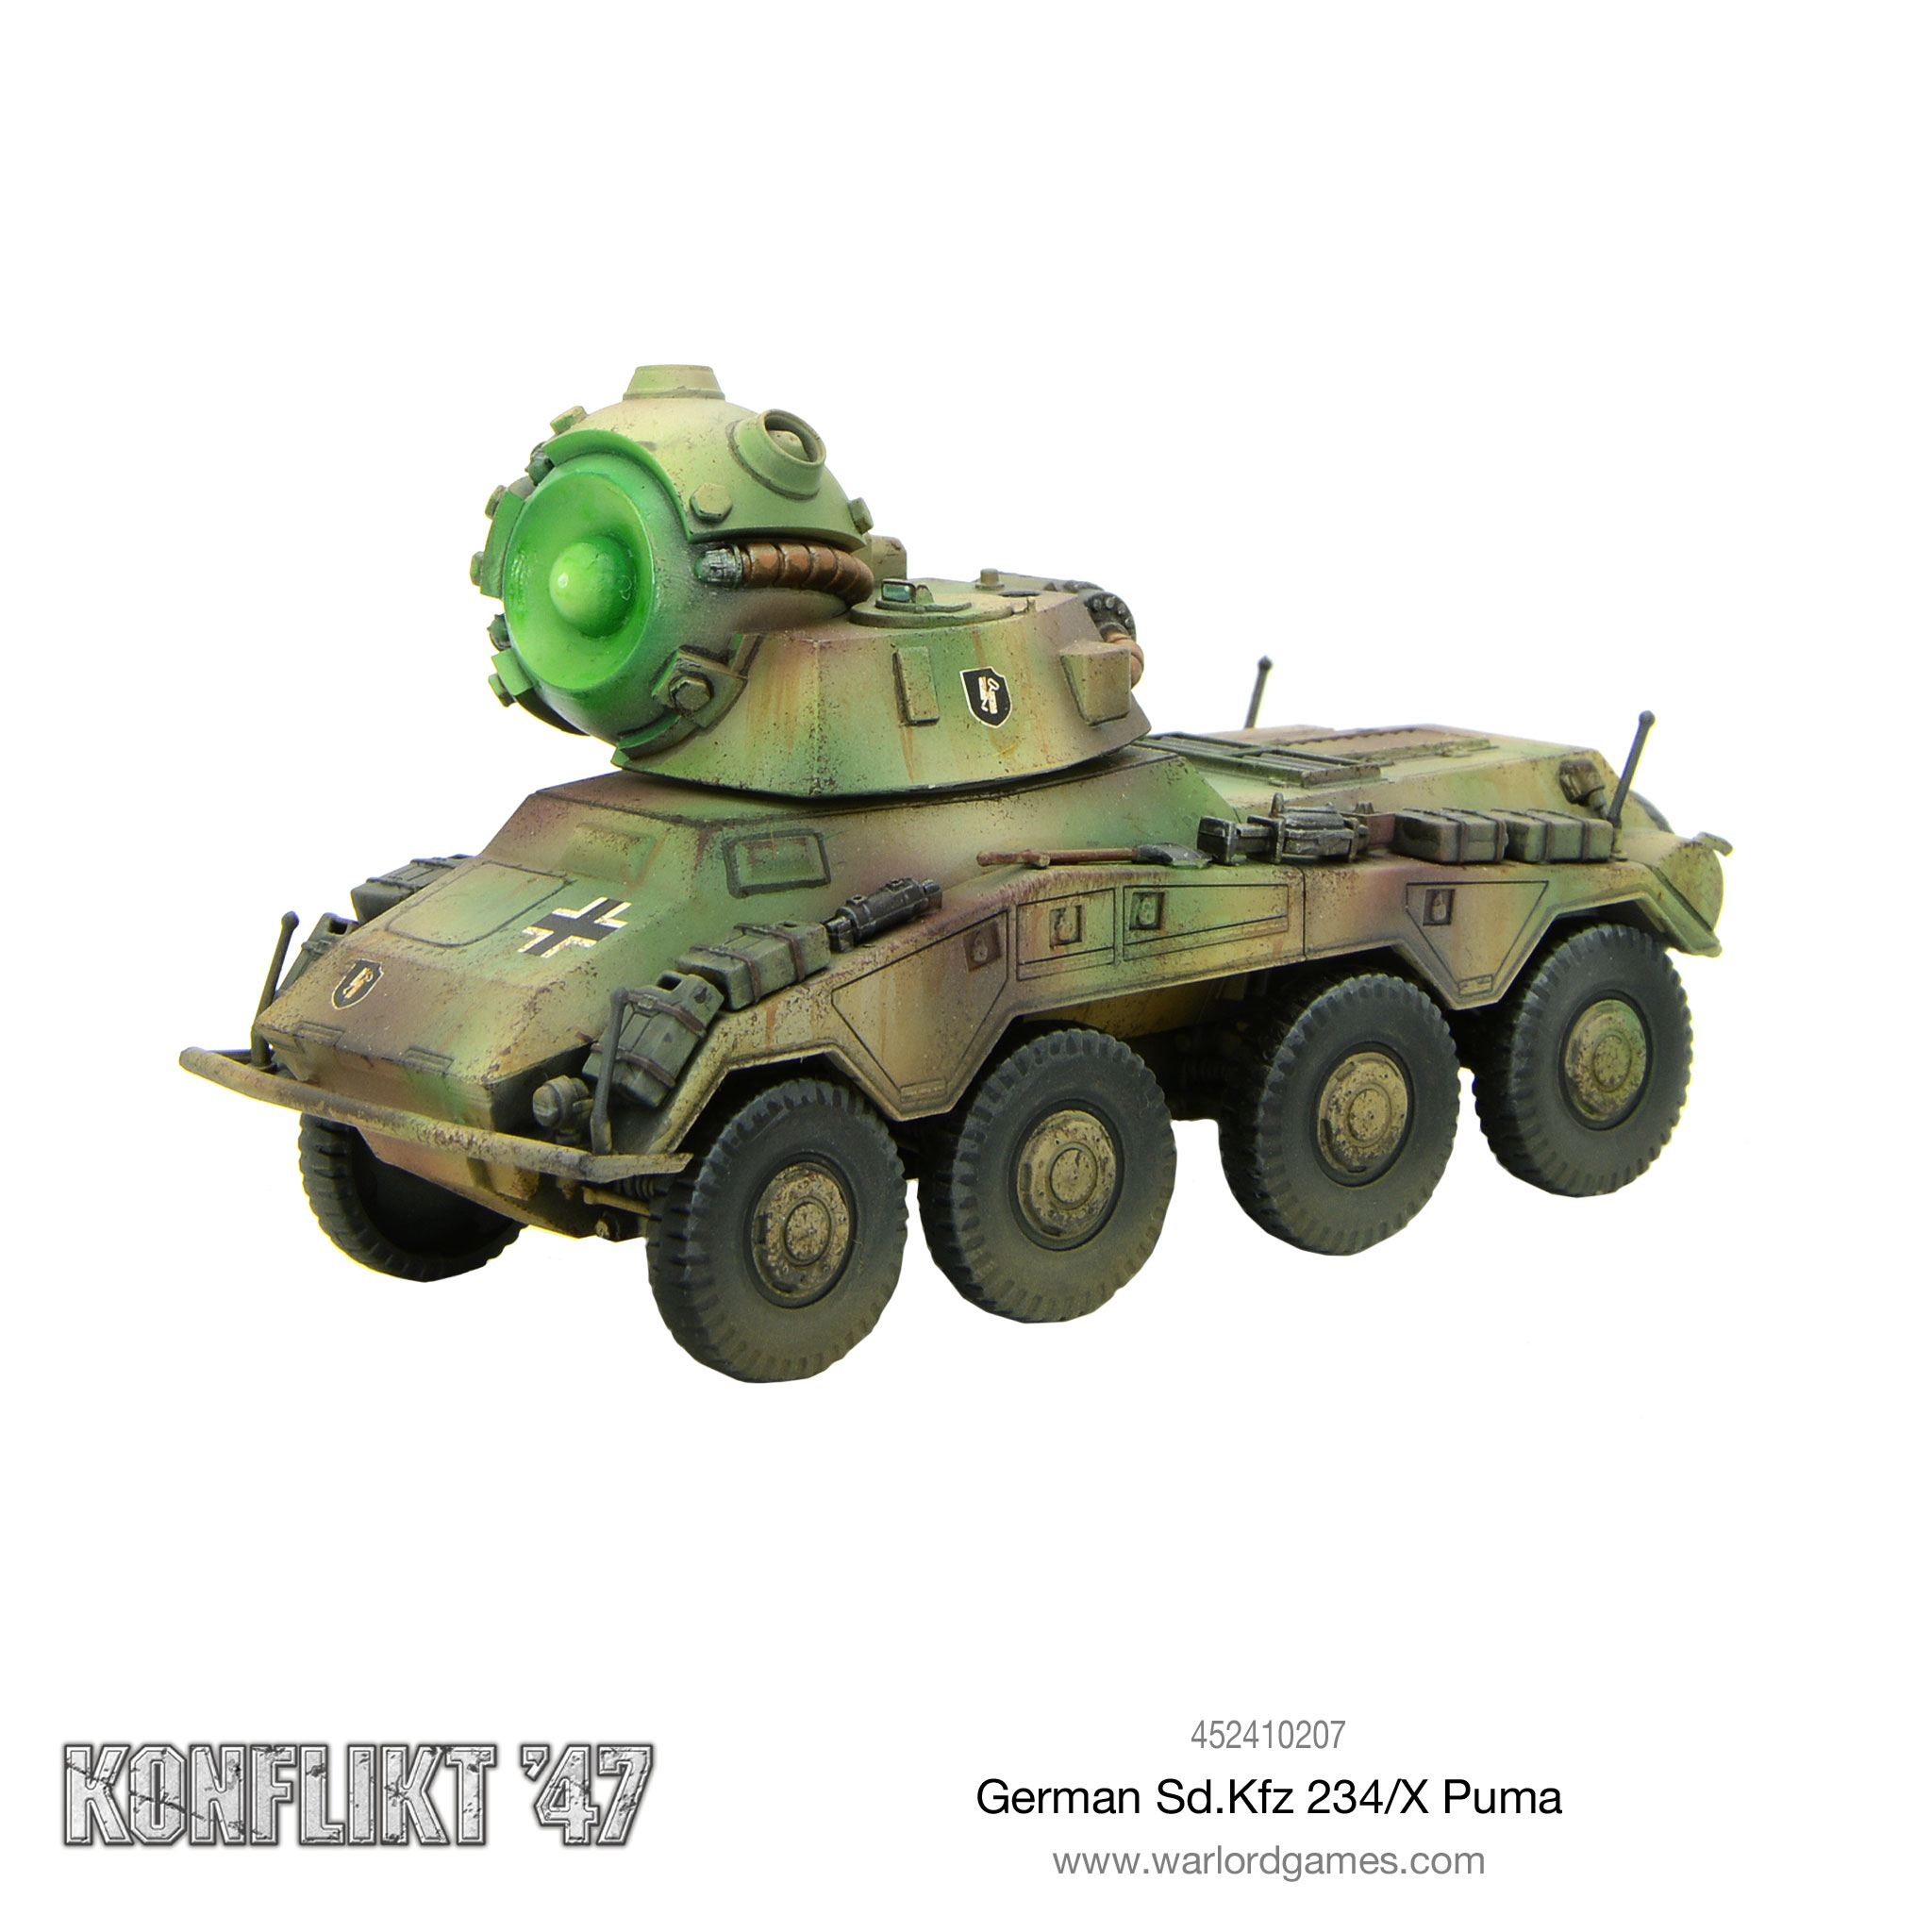 liebre Trascender Fangoso New: Sd.Kfz 234/X Puma - Warlord Games